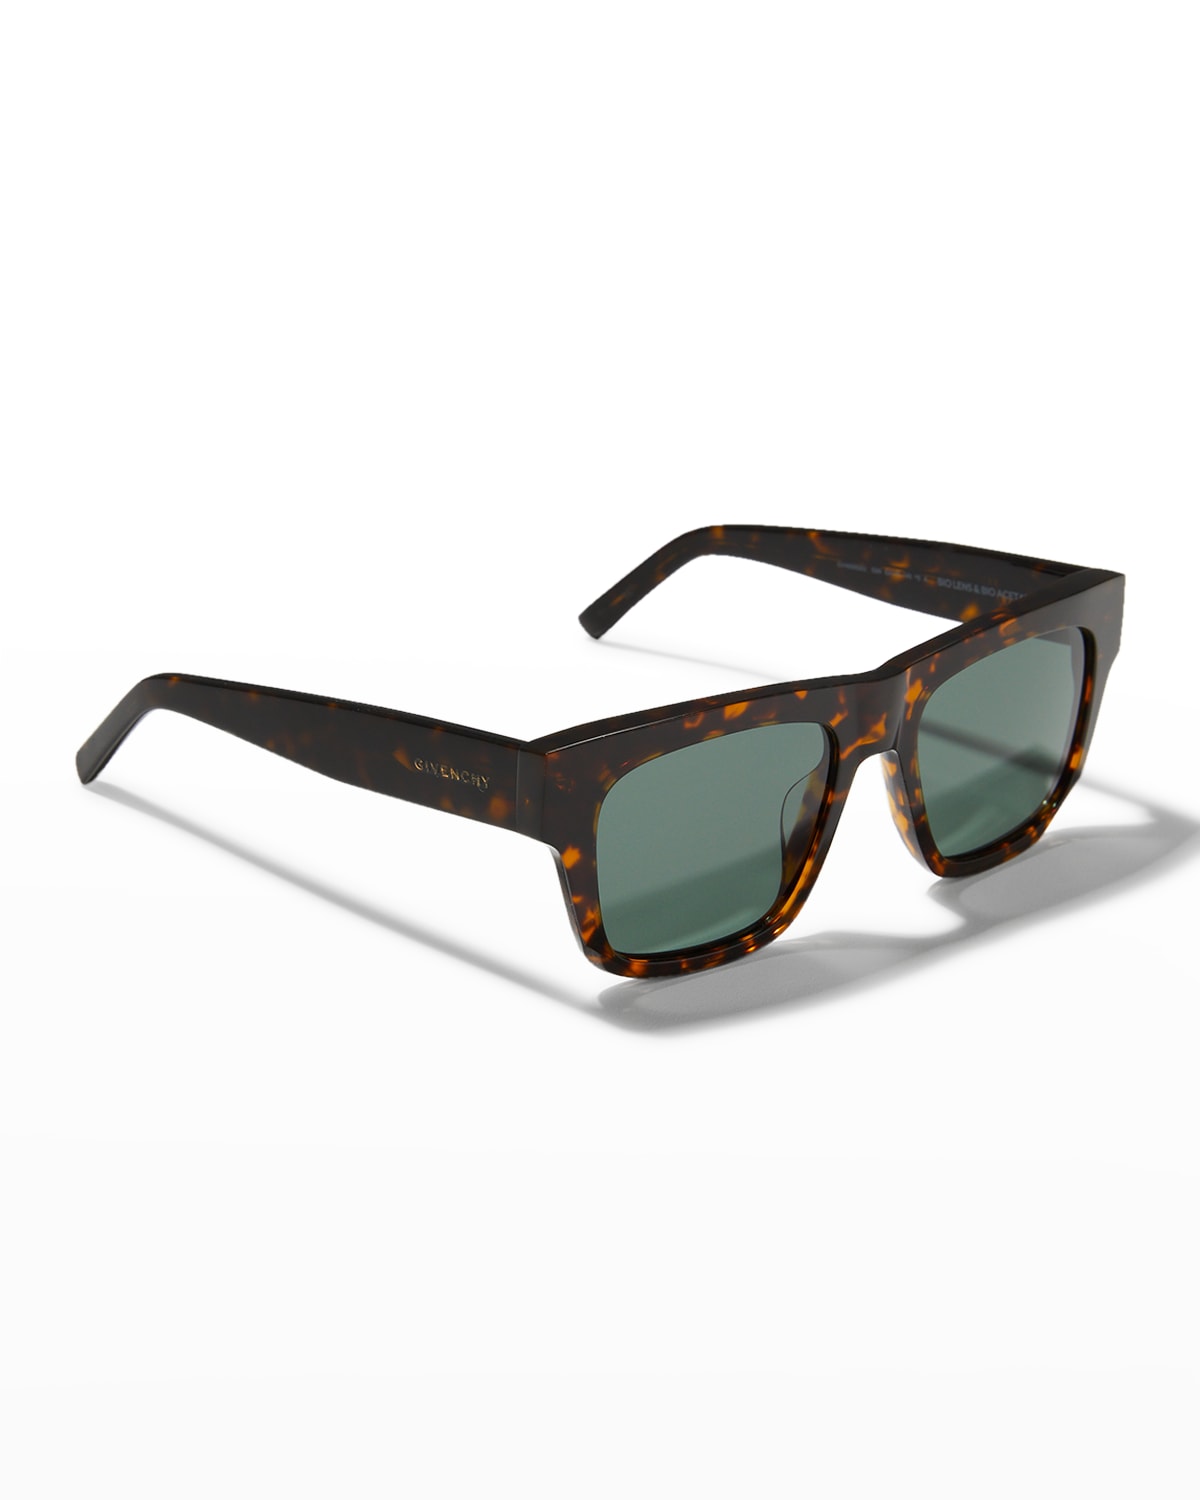 Givenchy 52mm Polarized Square Sunglasses In Dark Havana Green